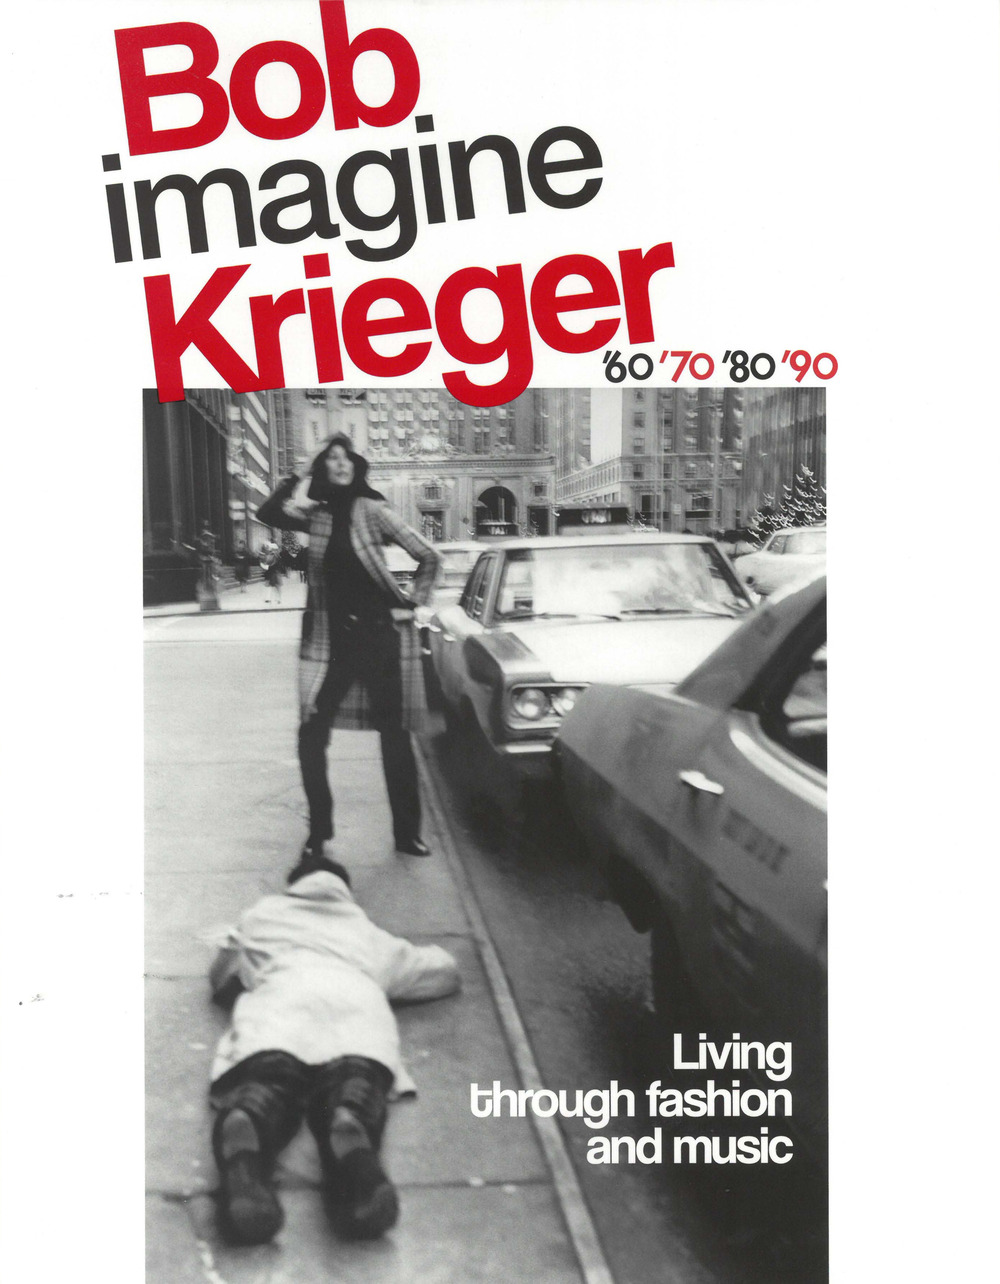 Bob Krieger imagine. Living through fashion and music '60 '70 '80 '90. Ediz. italiana e inglese